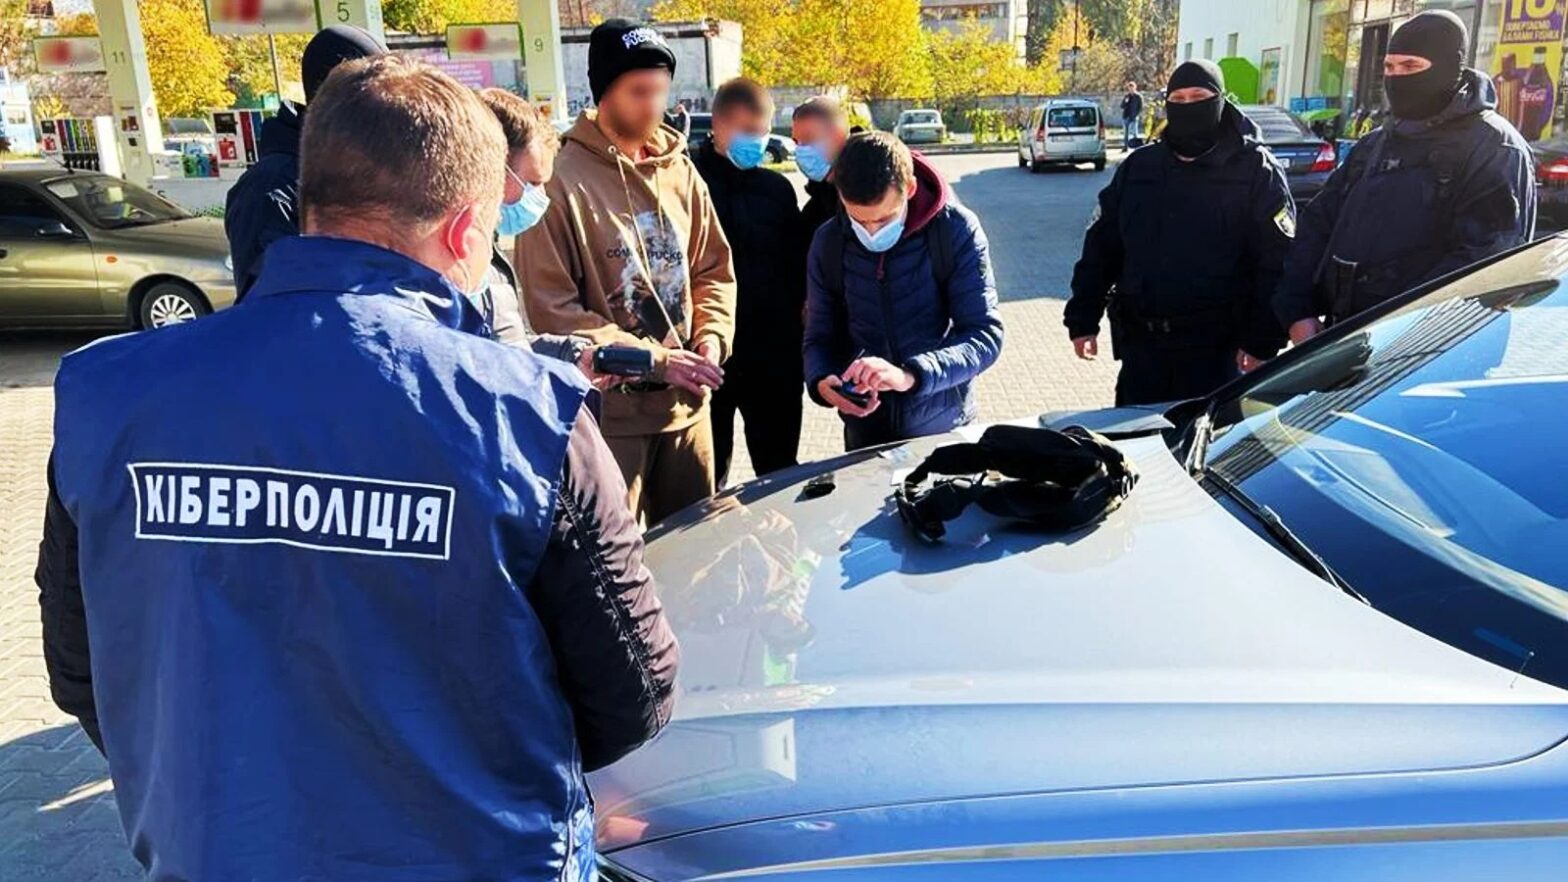 Ukrainian law enforcers arrested